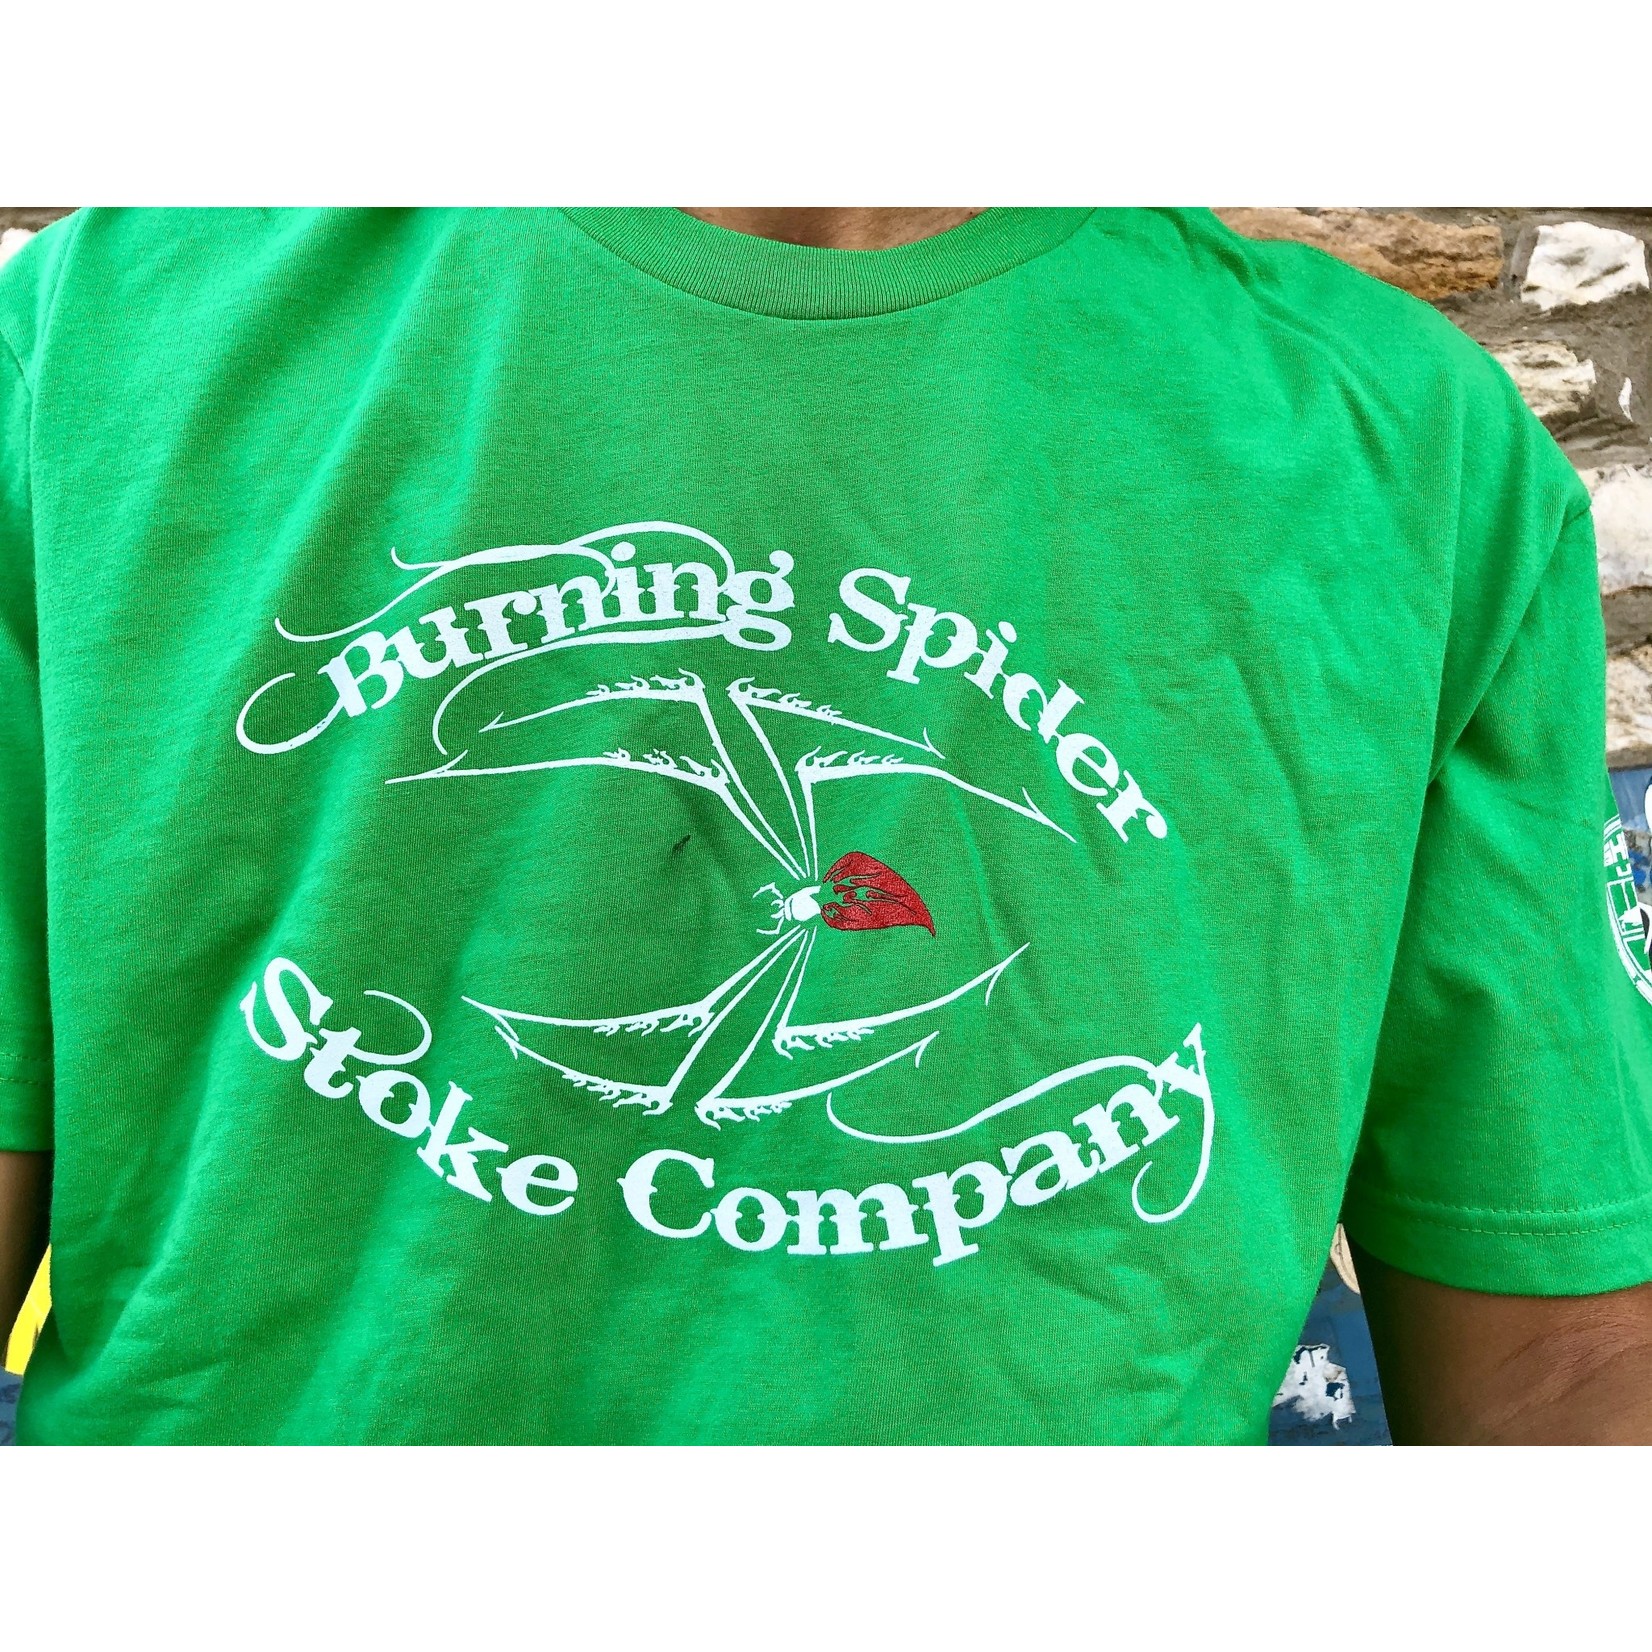 Burning Spider Stoke Company Burning Spider Logo Shirt Green